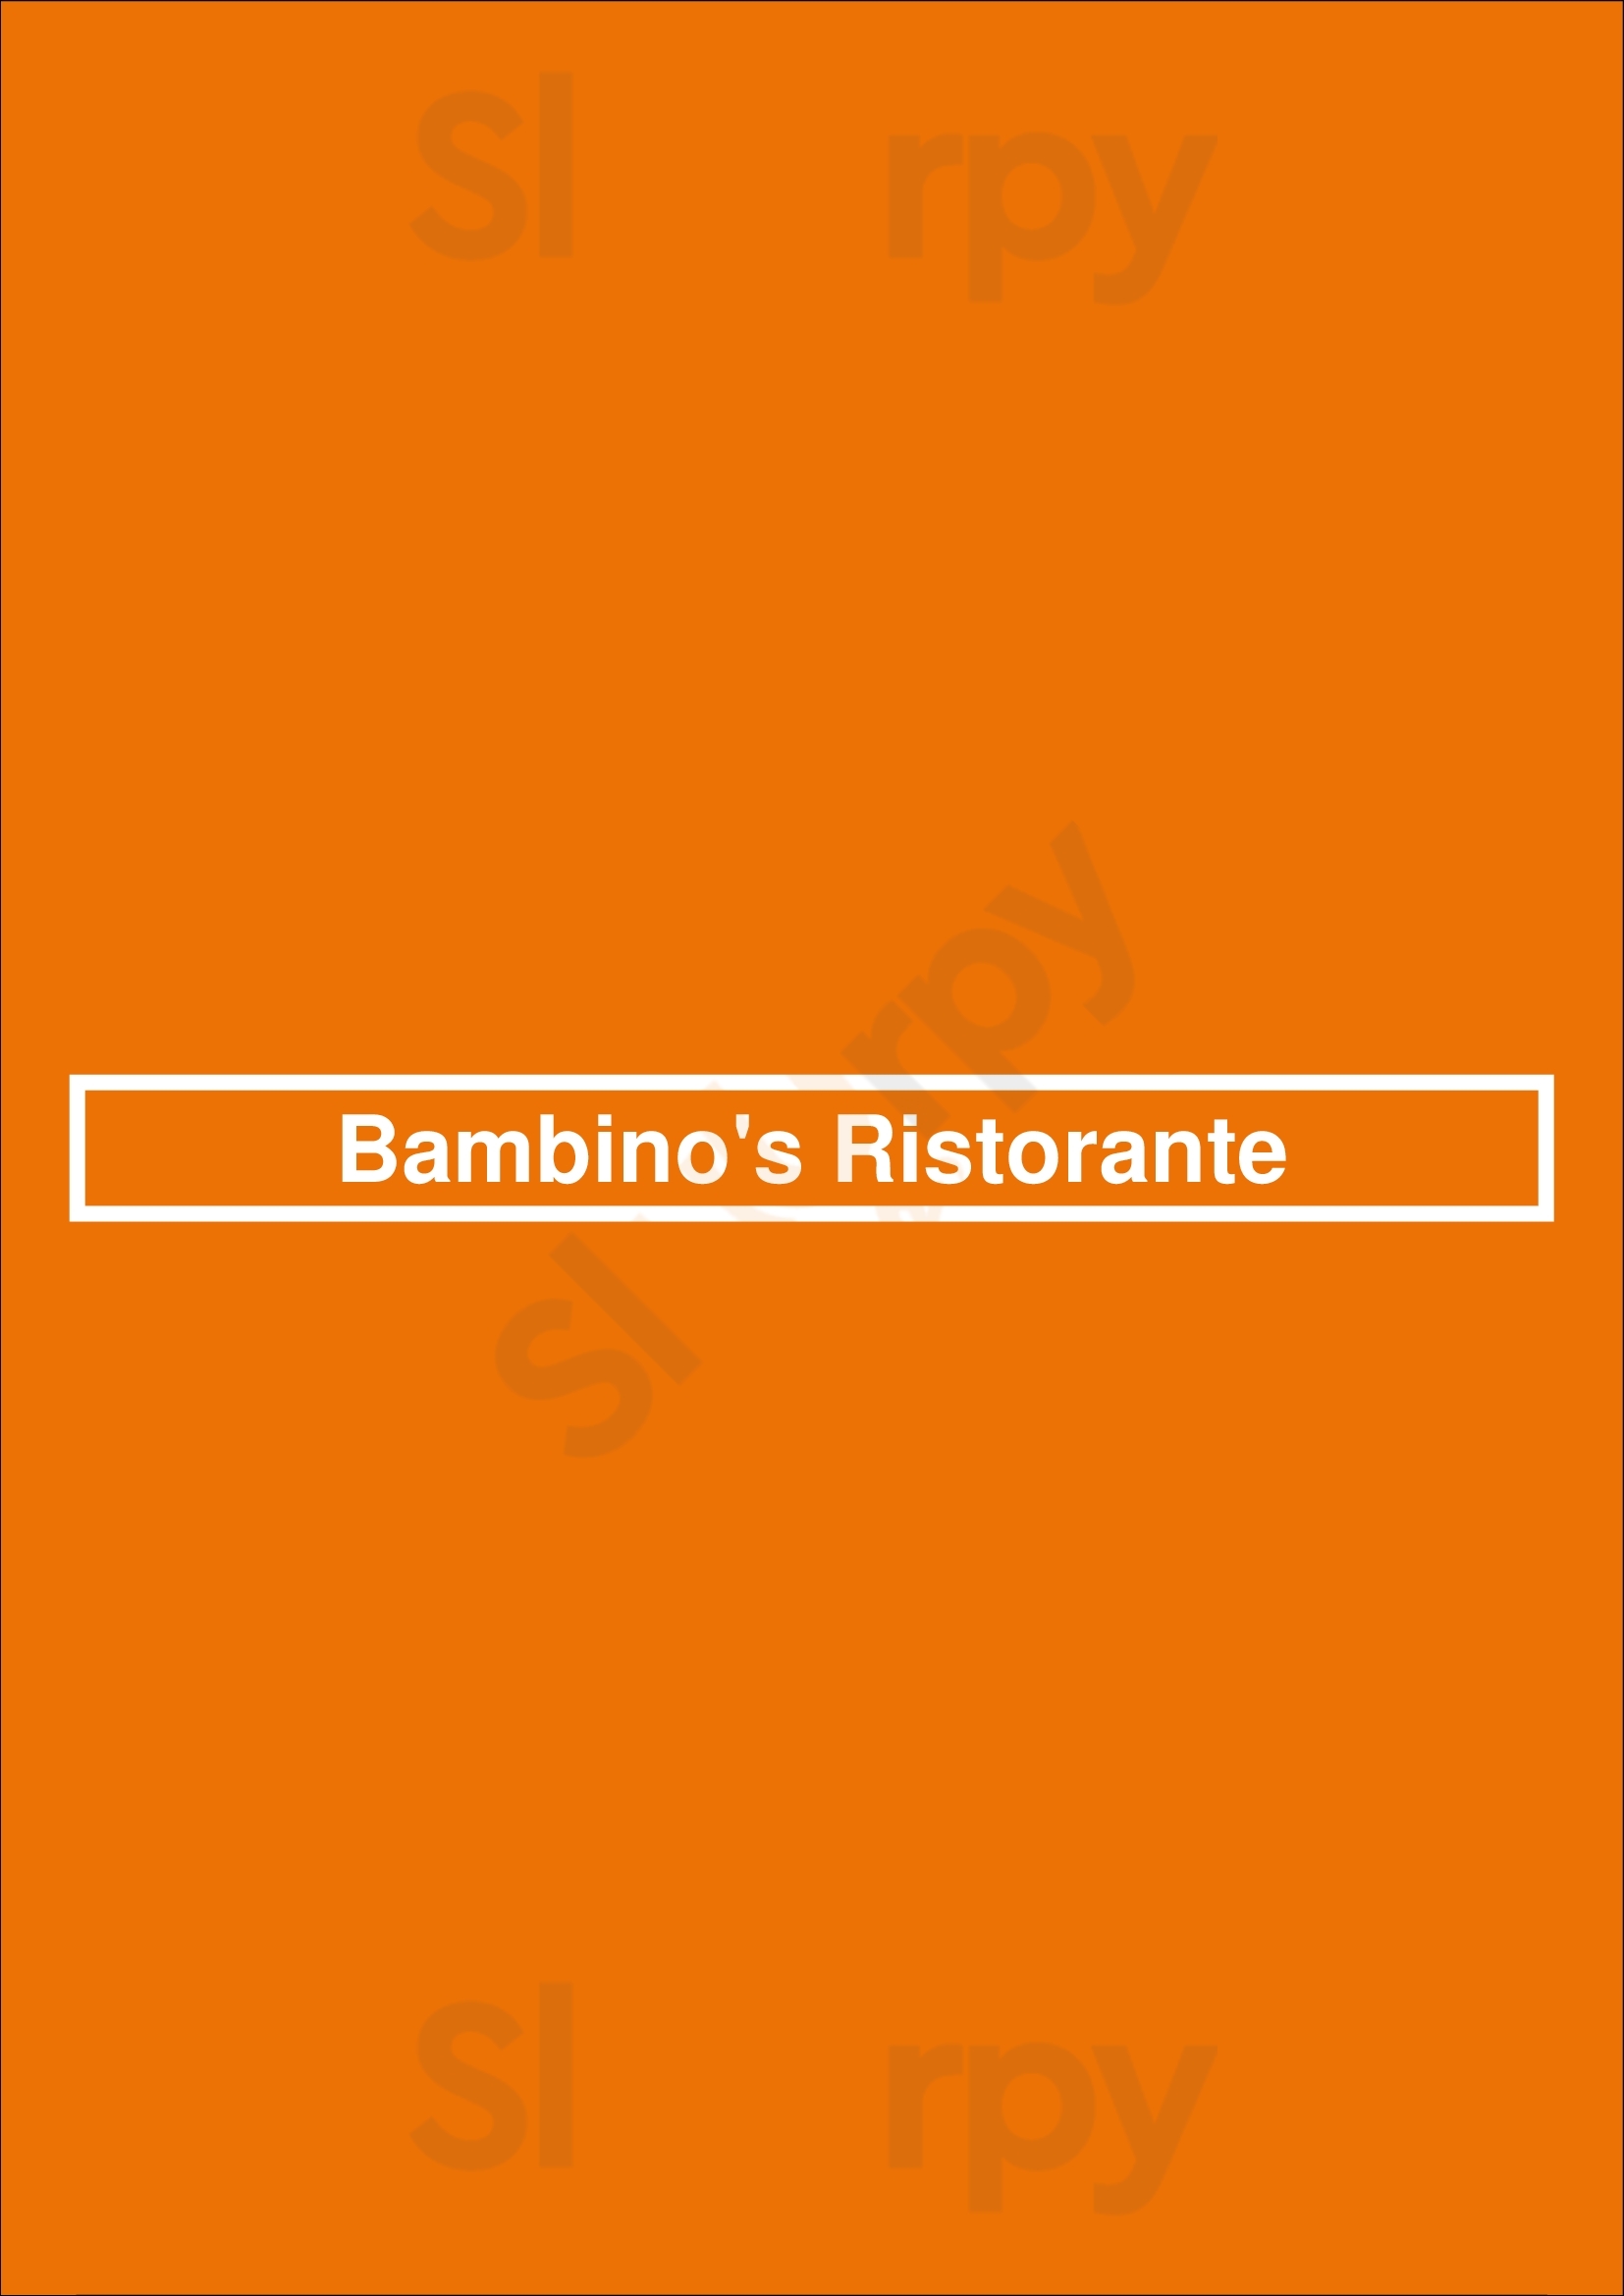 Bambino's Ristrorante San Francisco Menu - 1